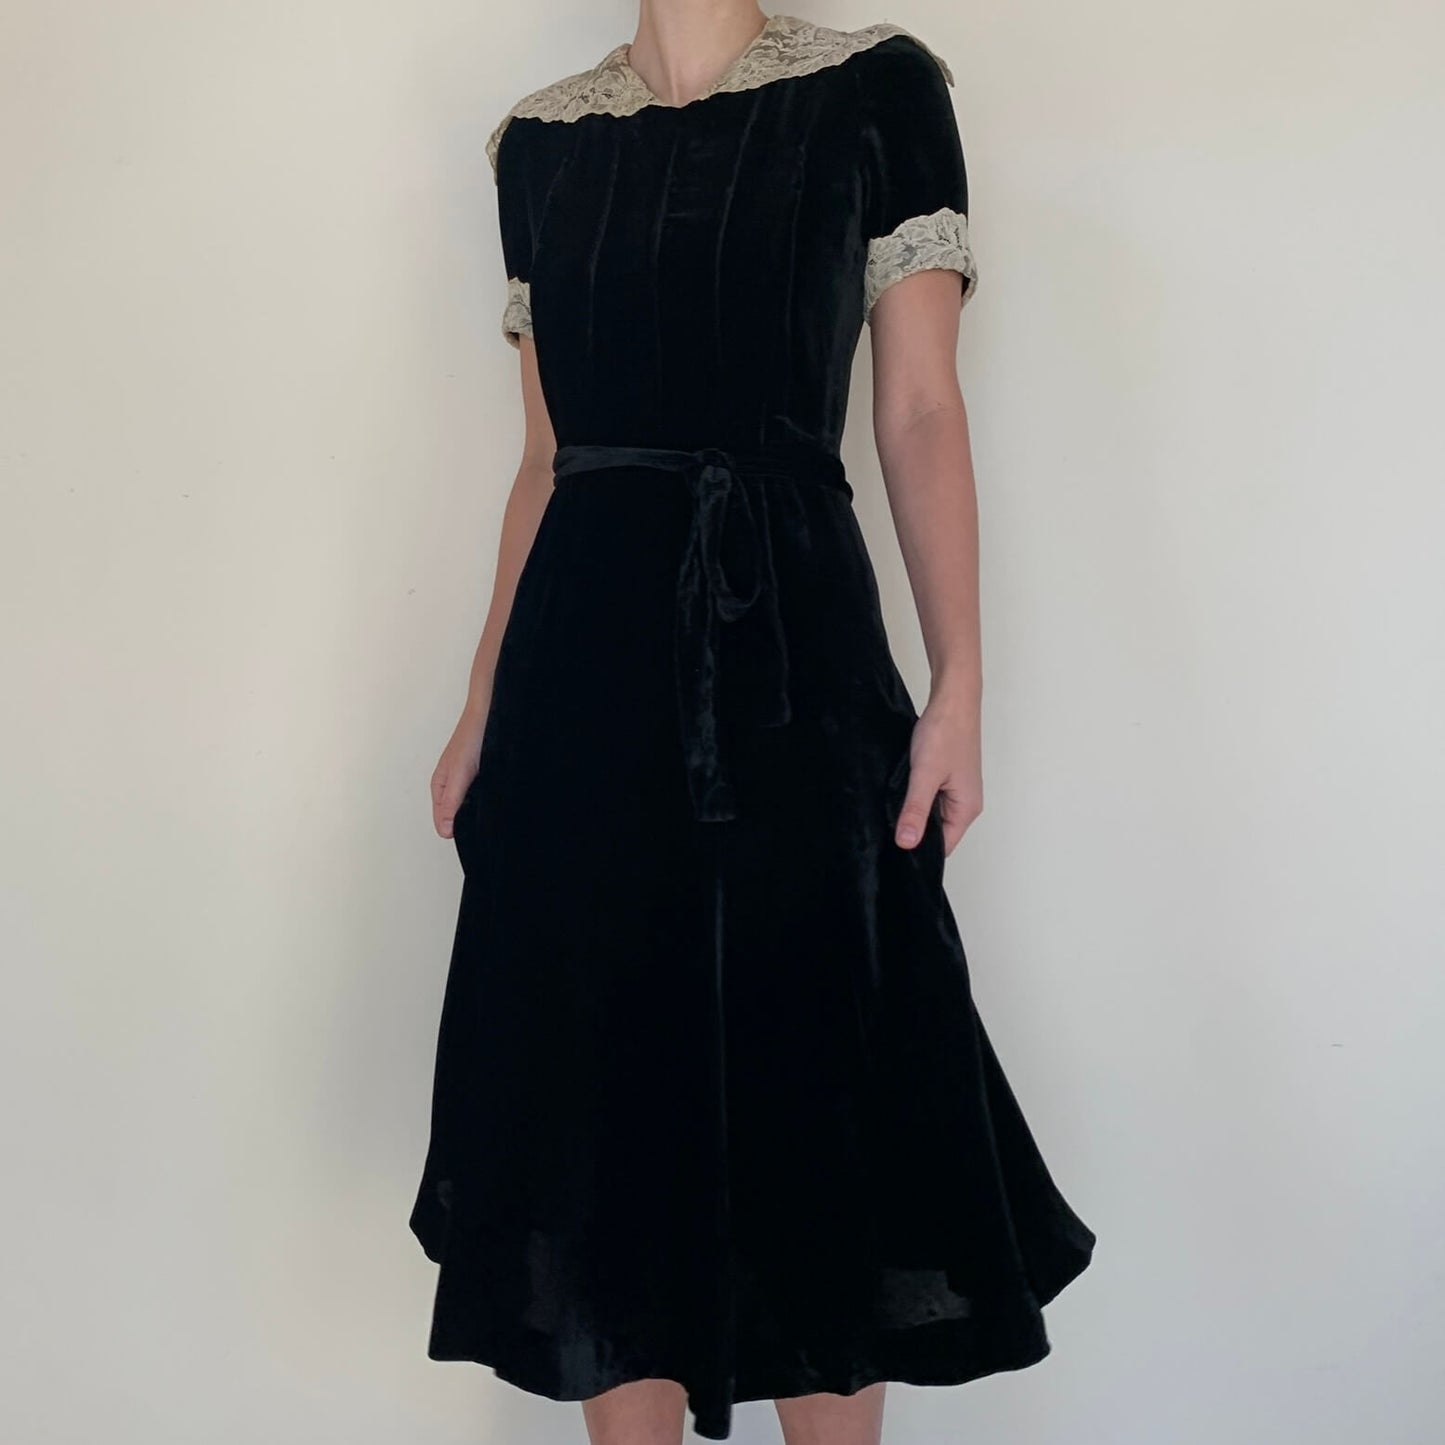 additional view of the black eisenberg originals dress